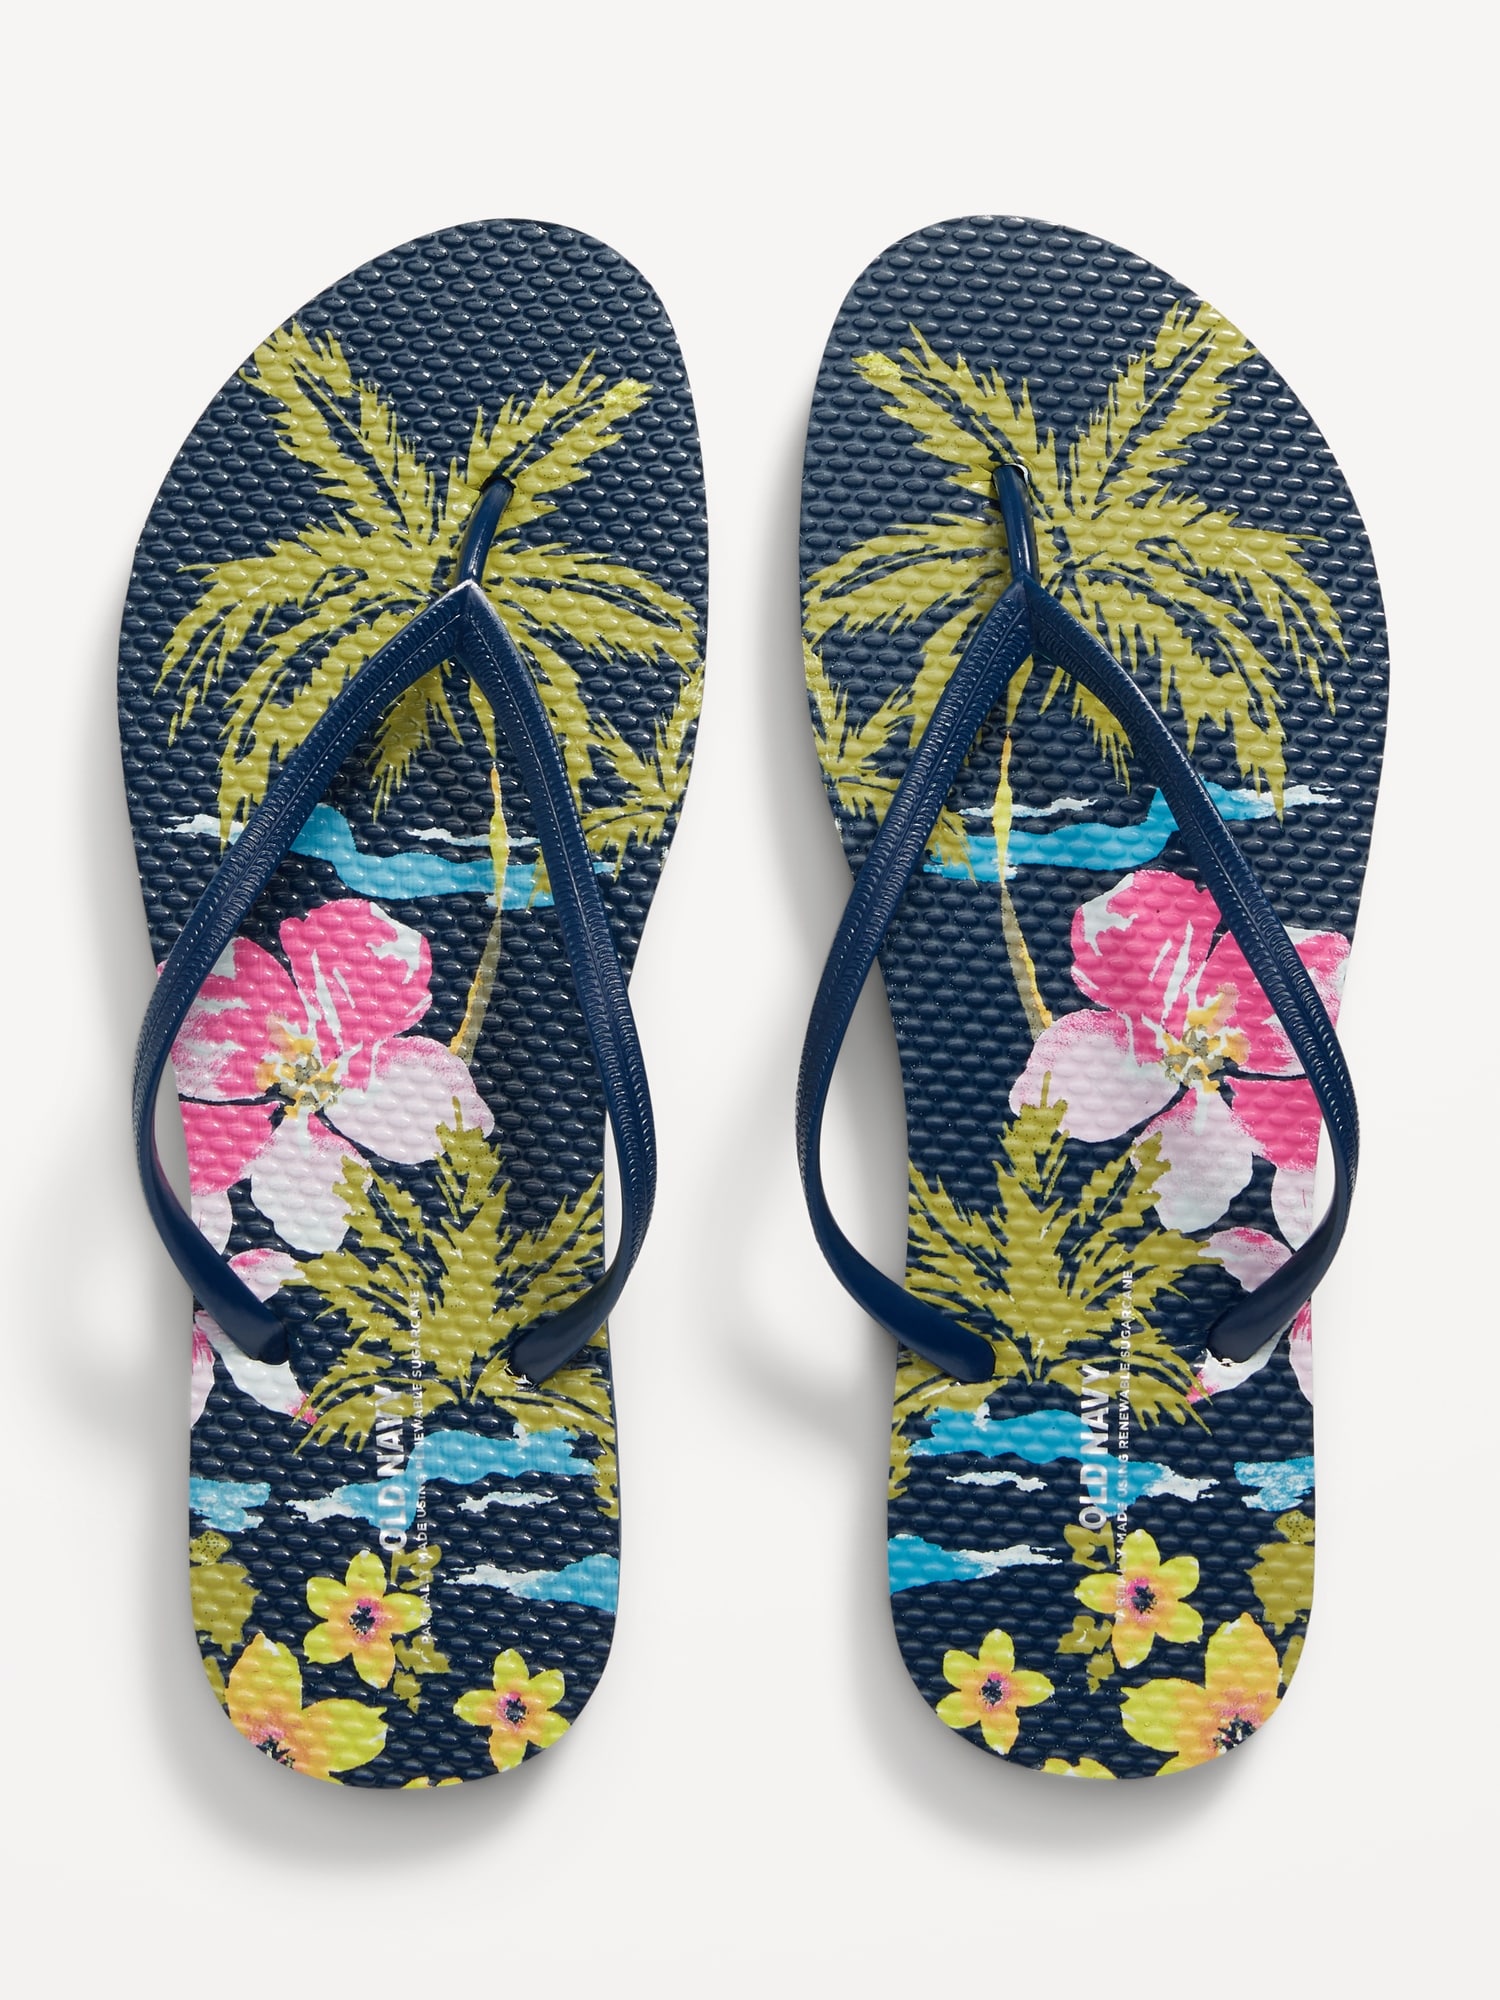 Flip-Flop Sandals (Partially Plant-Based)